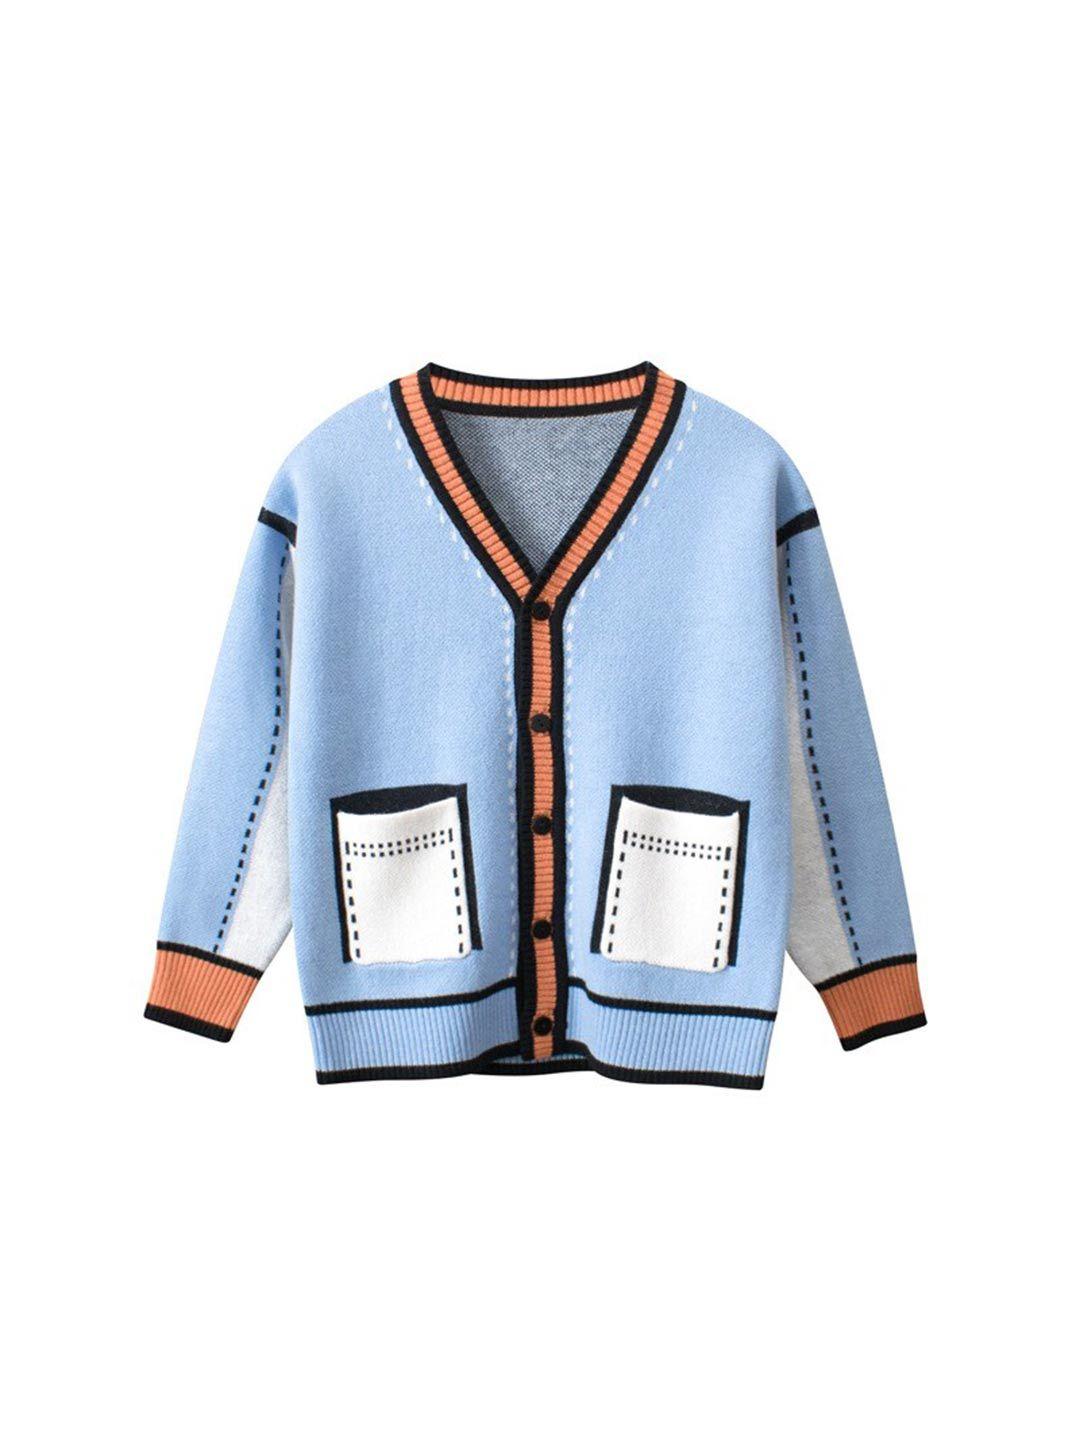 stylecast-boys-blue-&-white-v-neck-cardigan-sweater